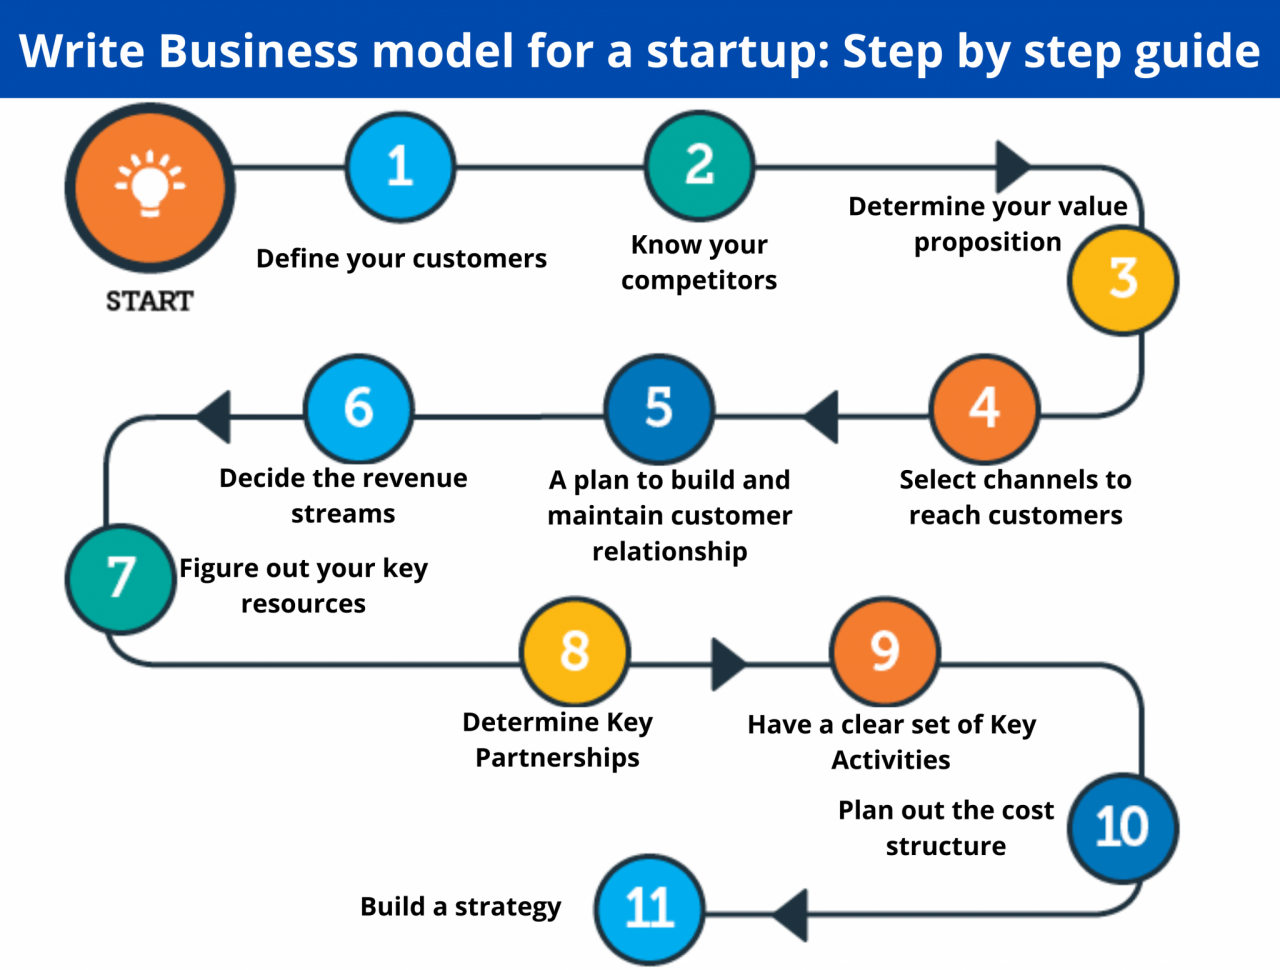 Developing an effective business model